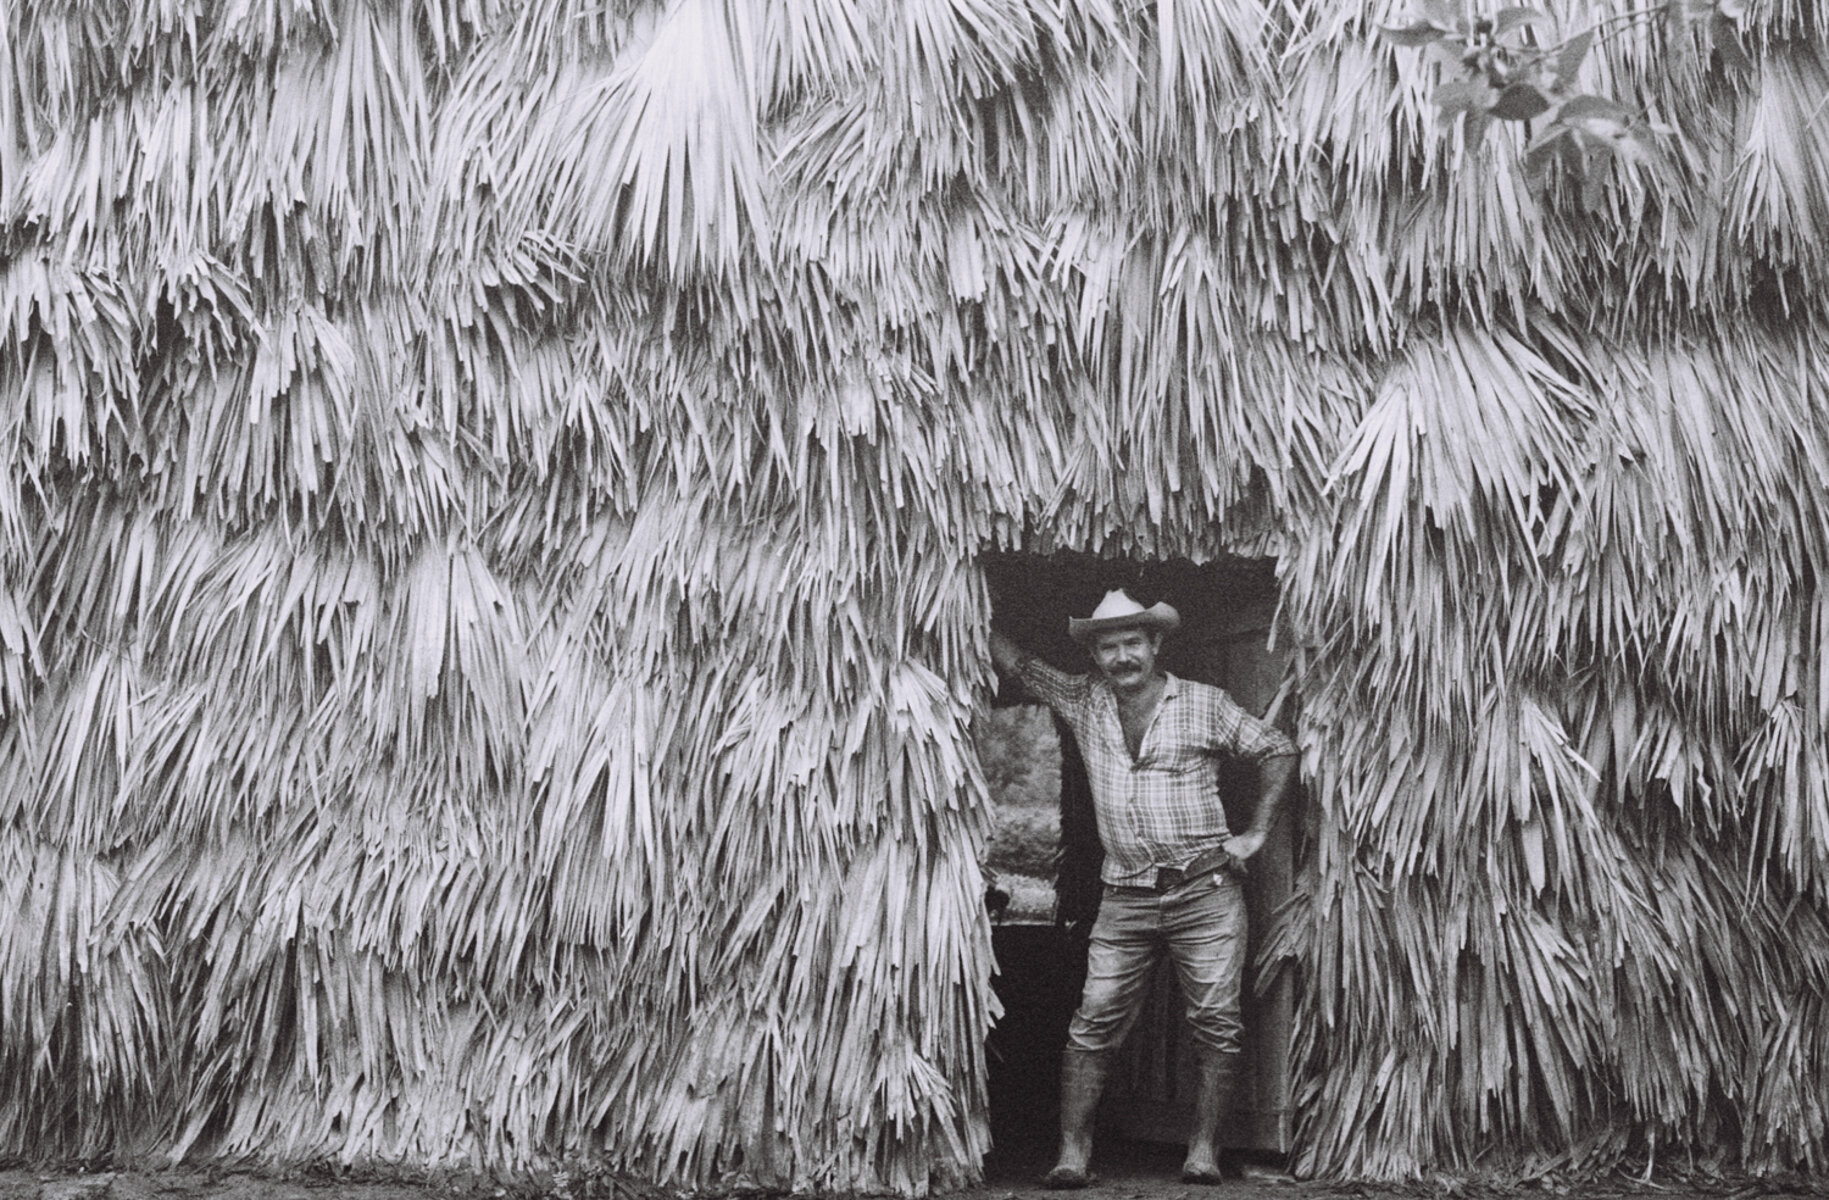  Tobacco farmer | Vinales, Cuba 